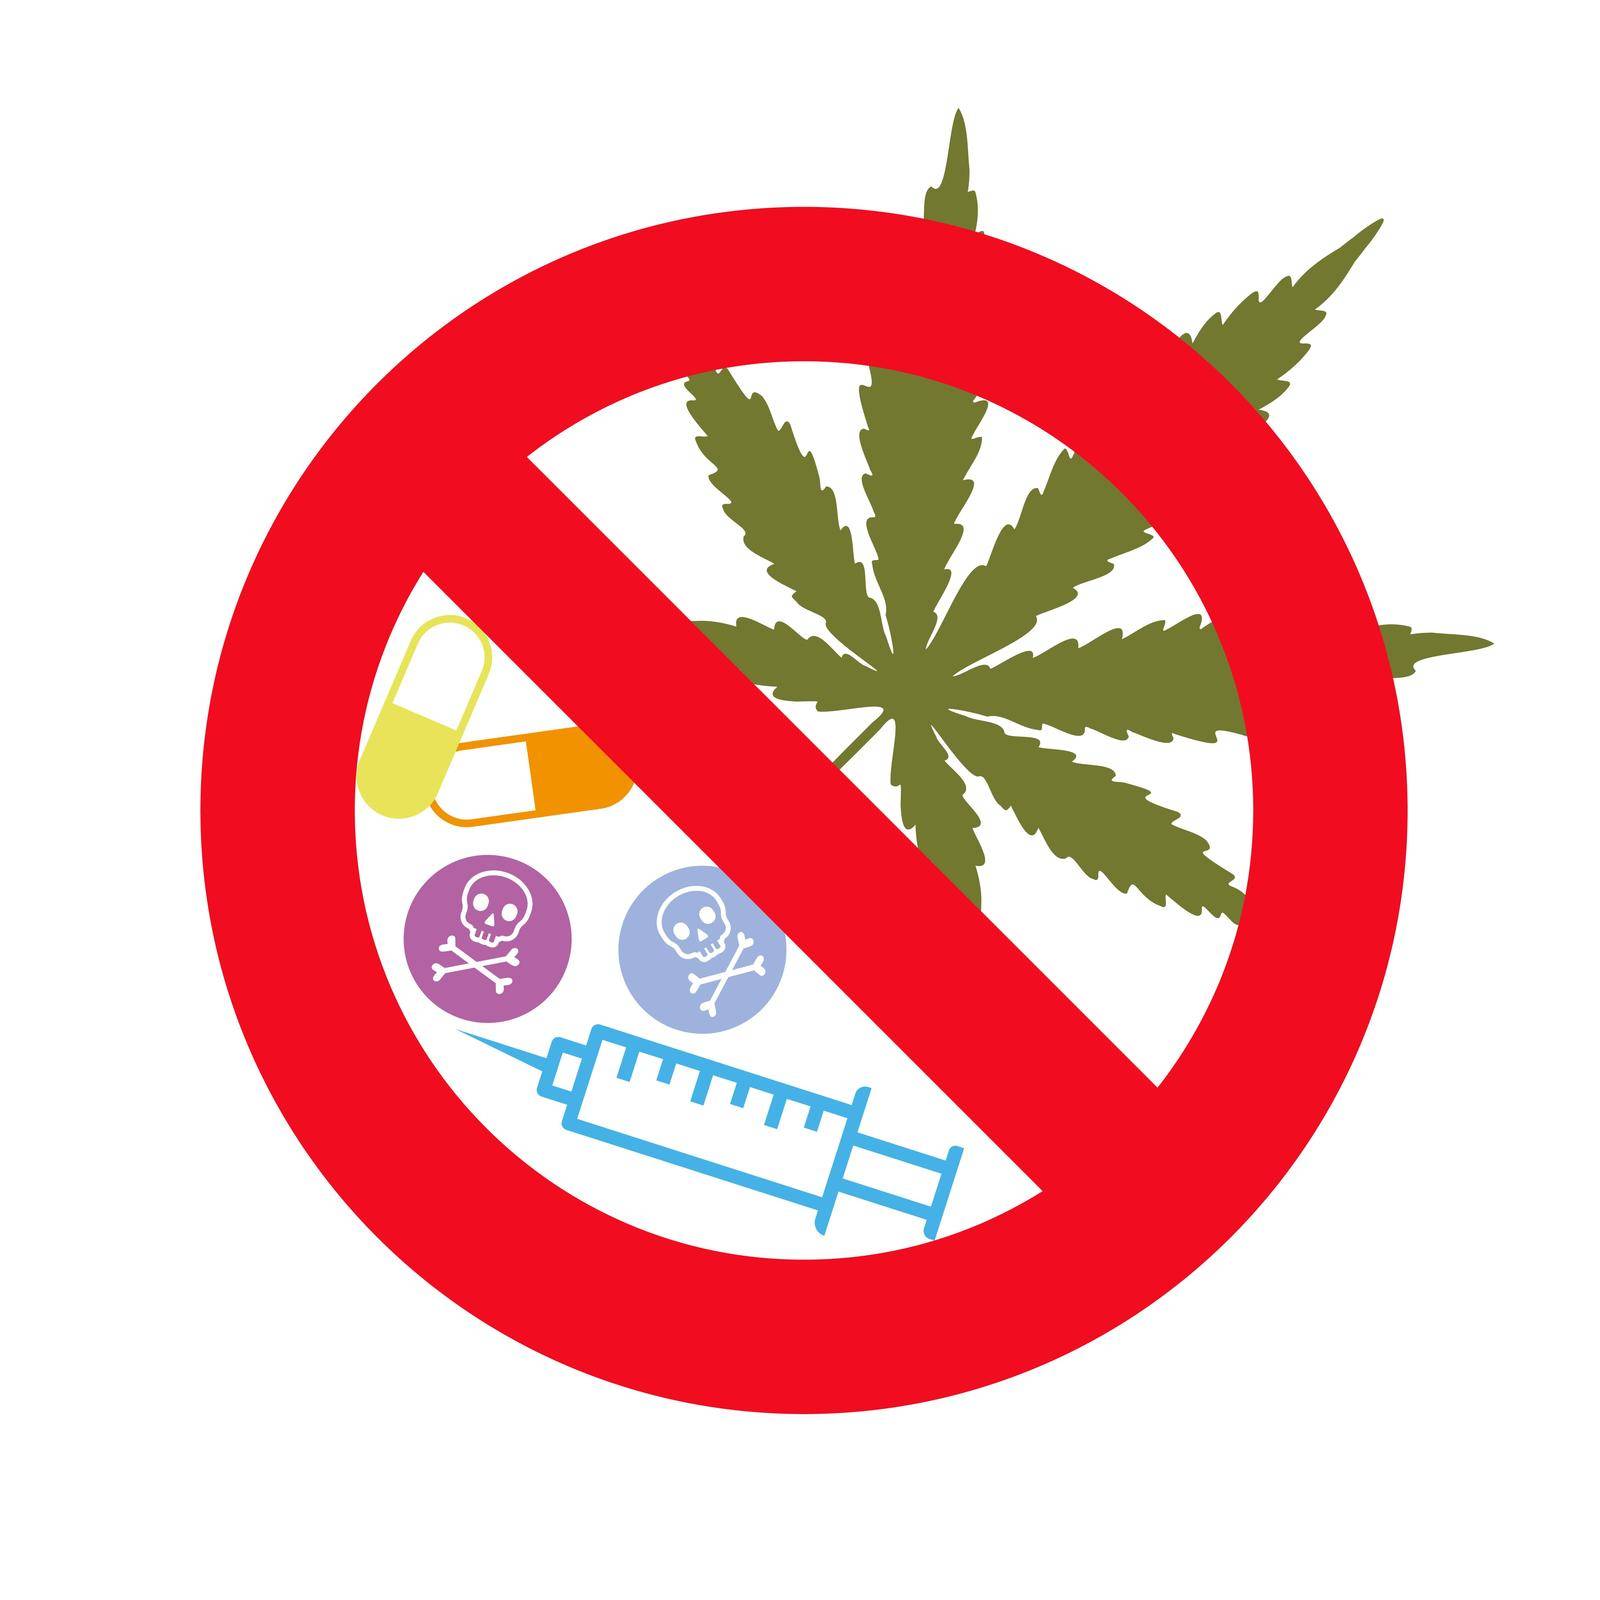 Anti drug badge by GALA_art